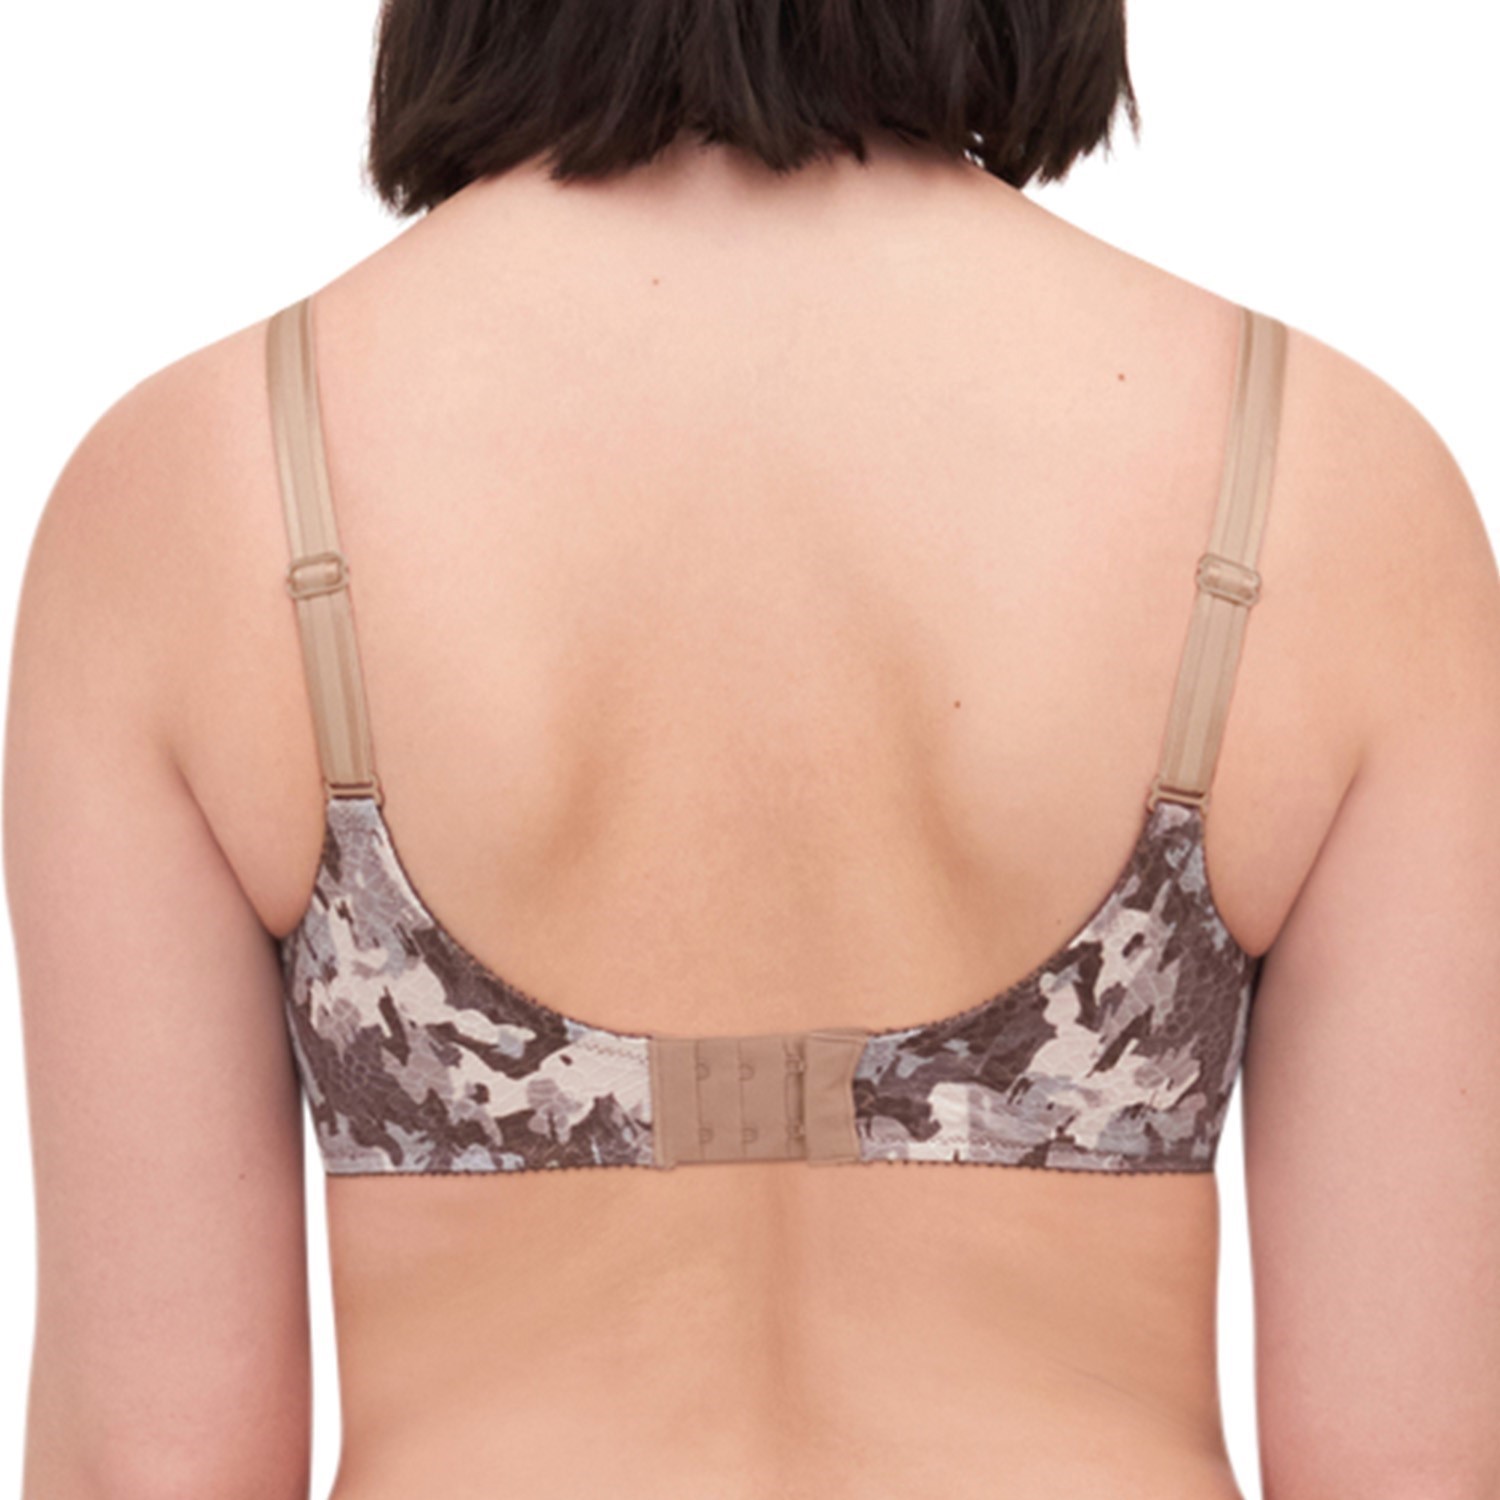 Camouflage bra for Women